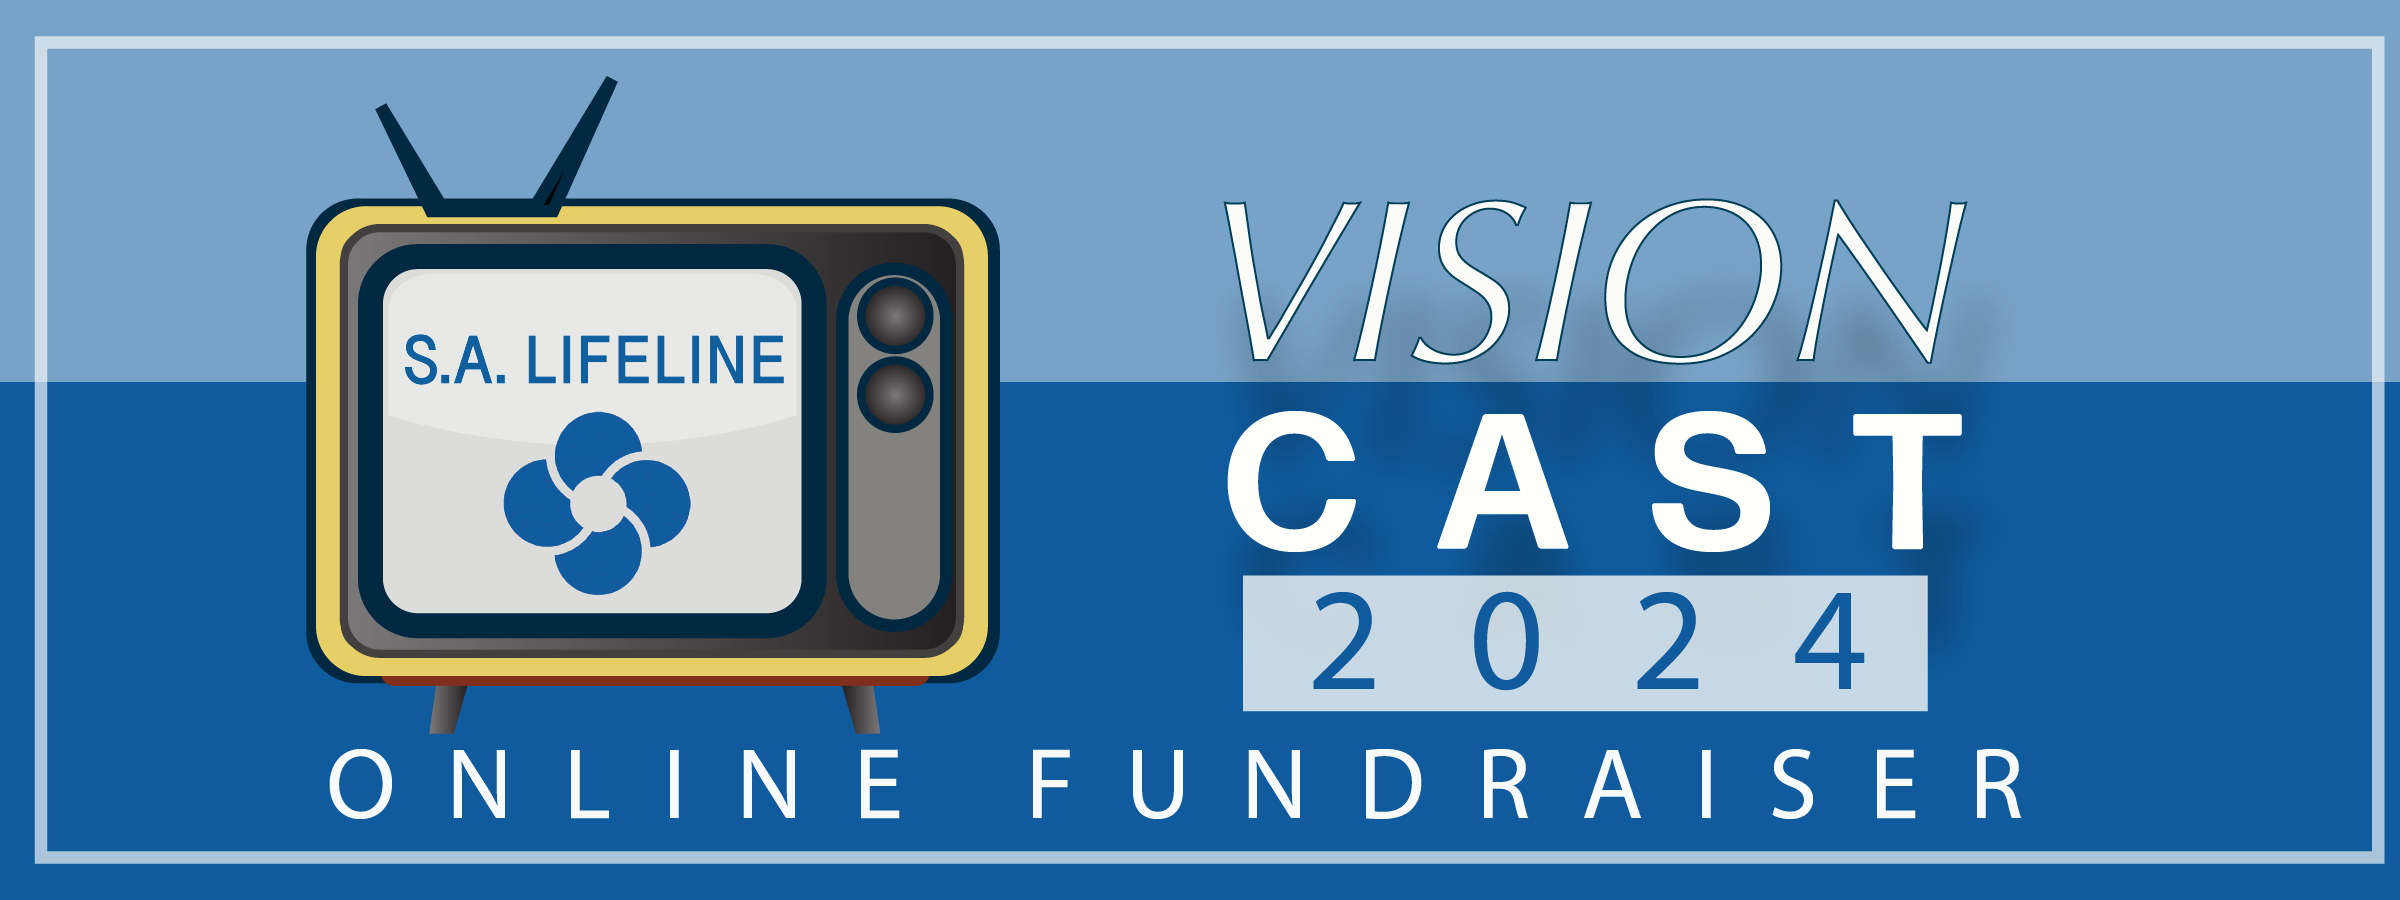 Vision Cast Fundraiser